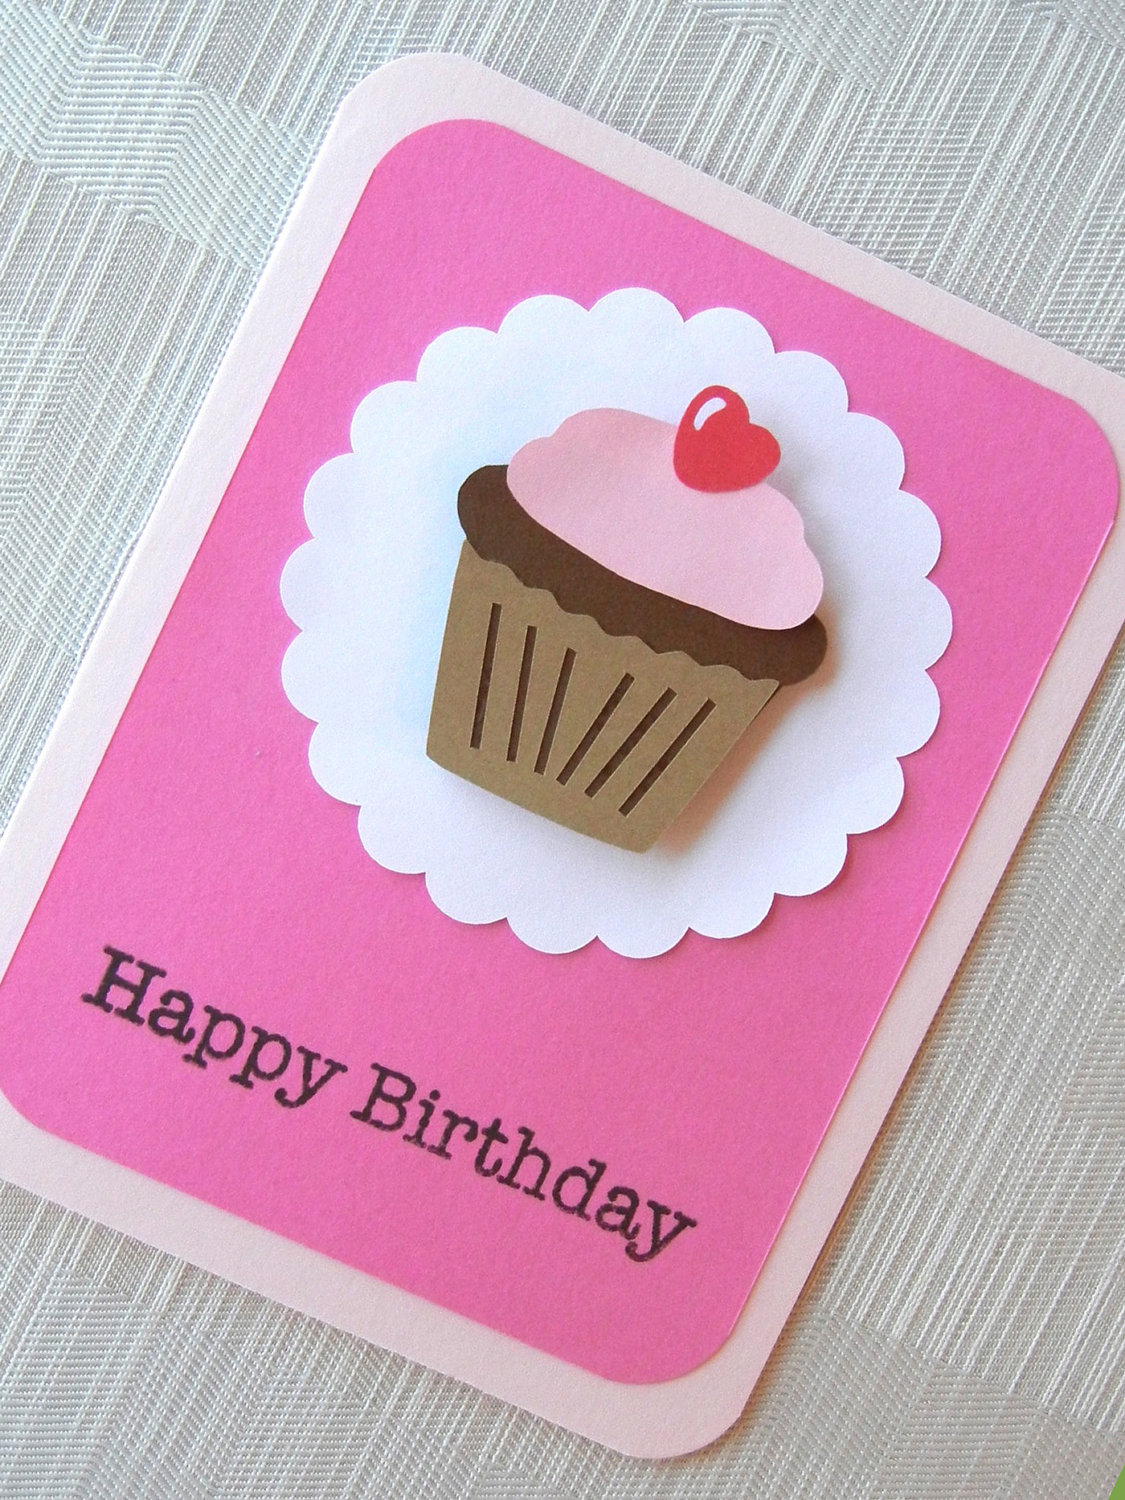 Handmade Birthday Greeting Cards Ideas Easy Diy Birthday Cards Ideas And Designs